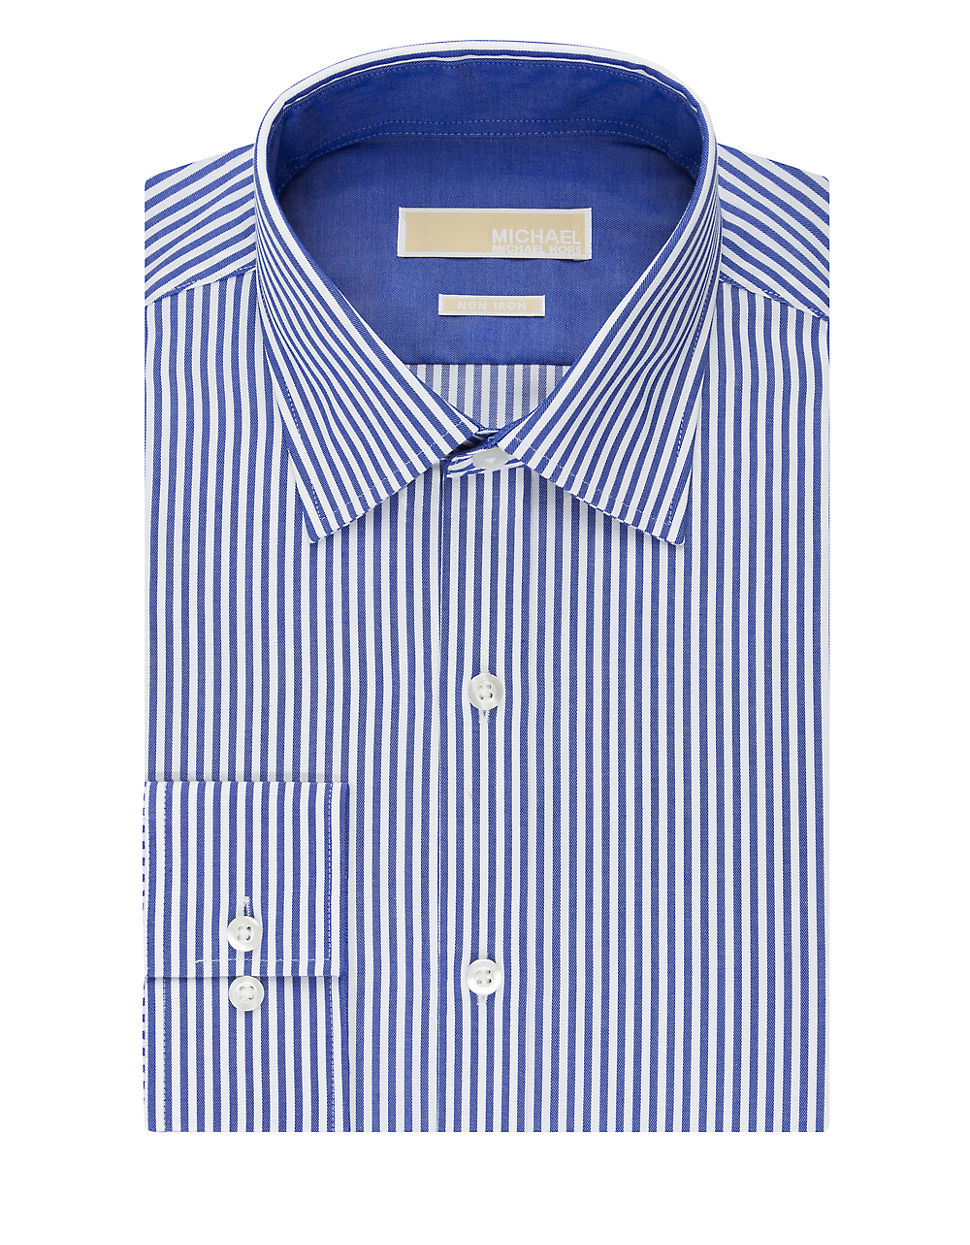 Michael michael kors Striped Dress Shirt in Blue for Men | Lyst